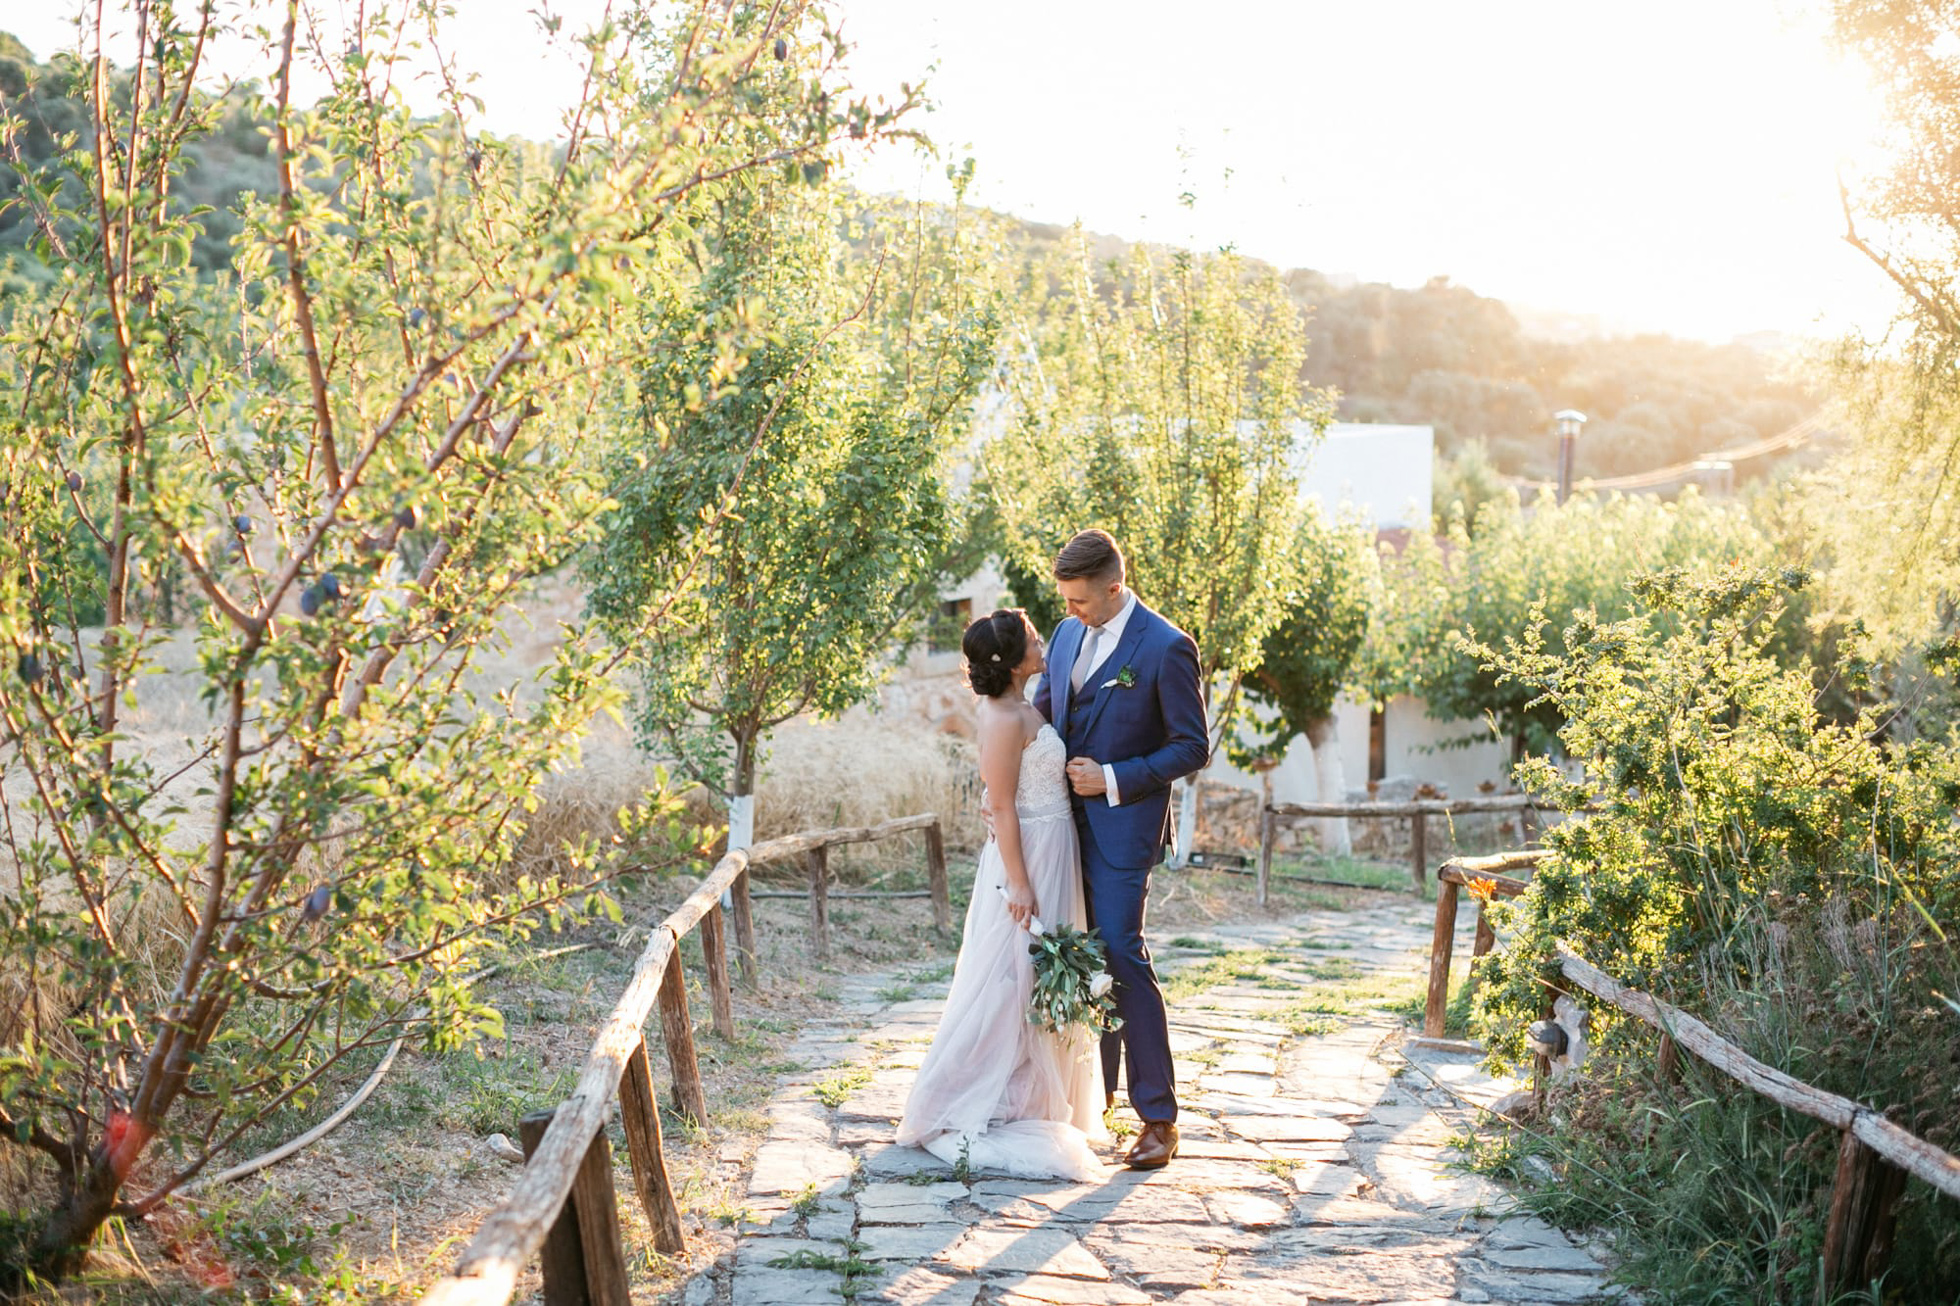 Bride and groom at their vineyard destination wedding in Agreco Farms, Grecotel, Crete, Greece.